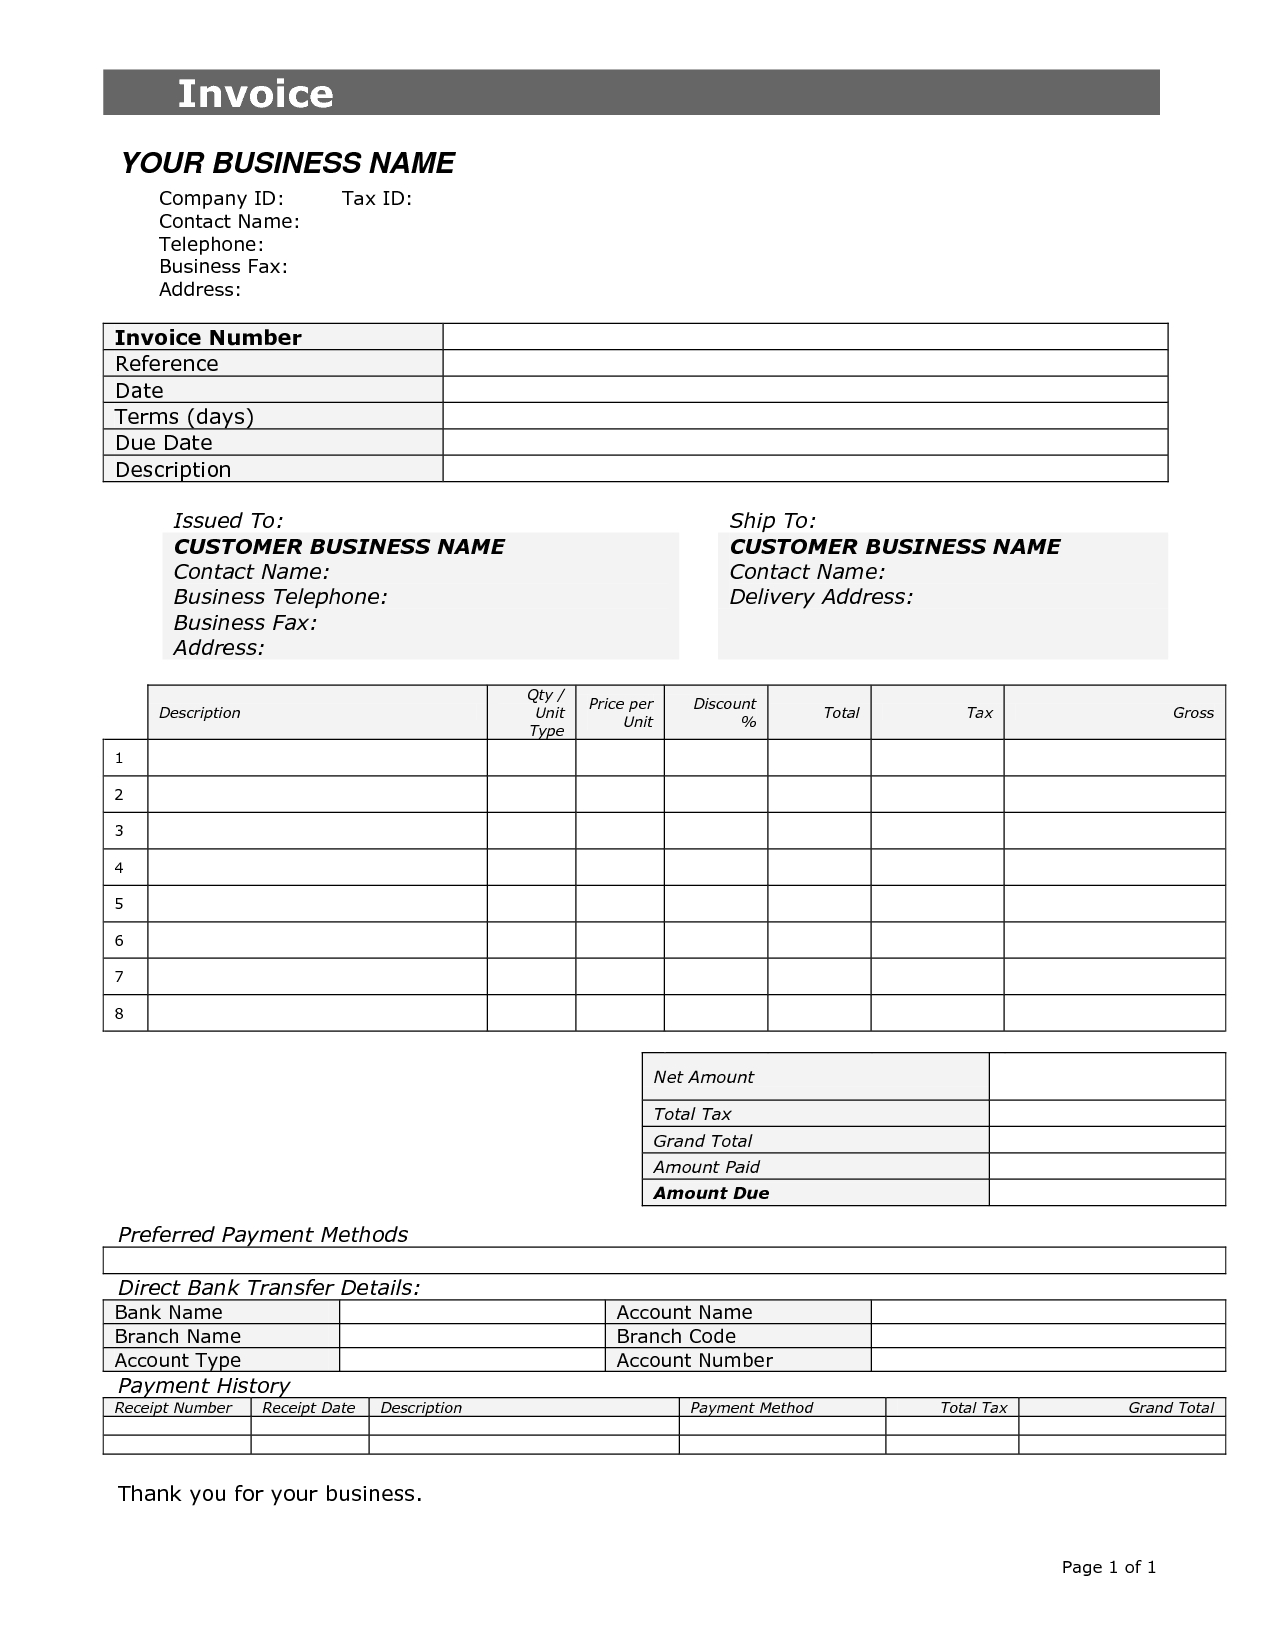 tax invoice layout accomplishment report formatabn tax invoice free invoice 1275 X 1650